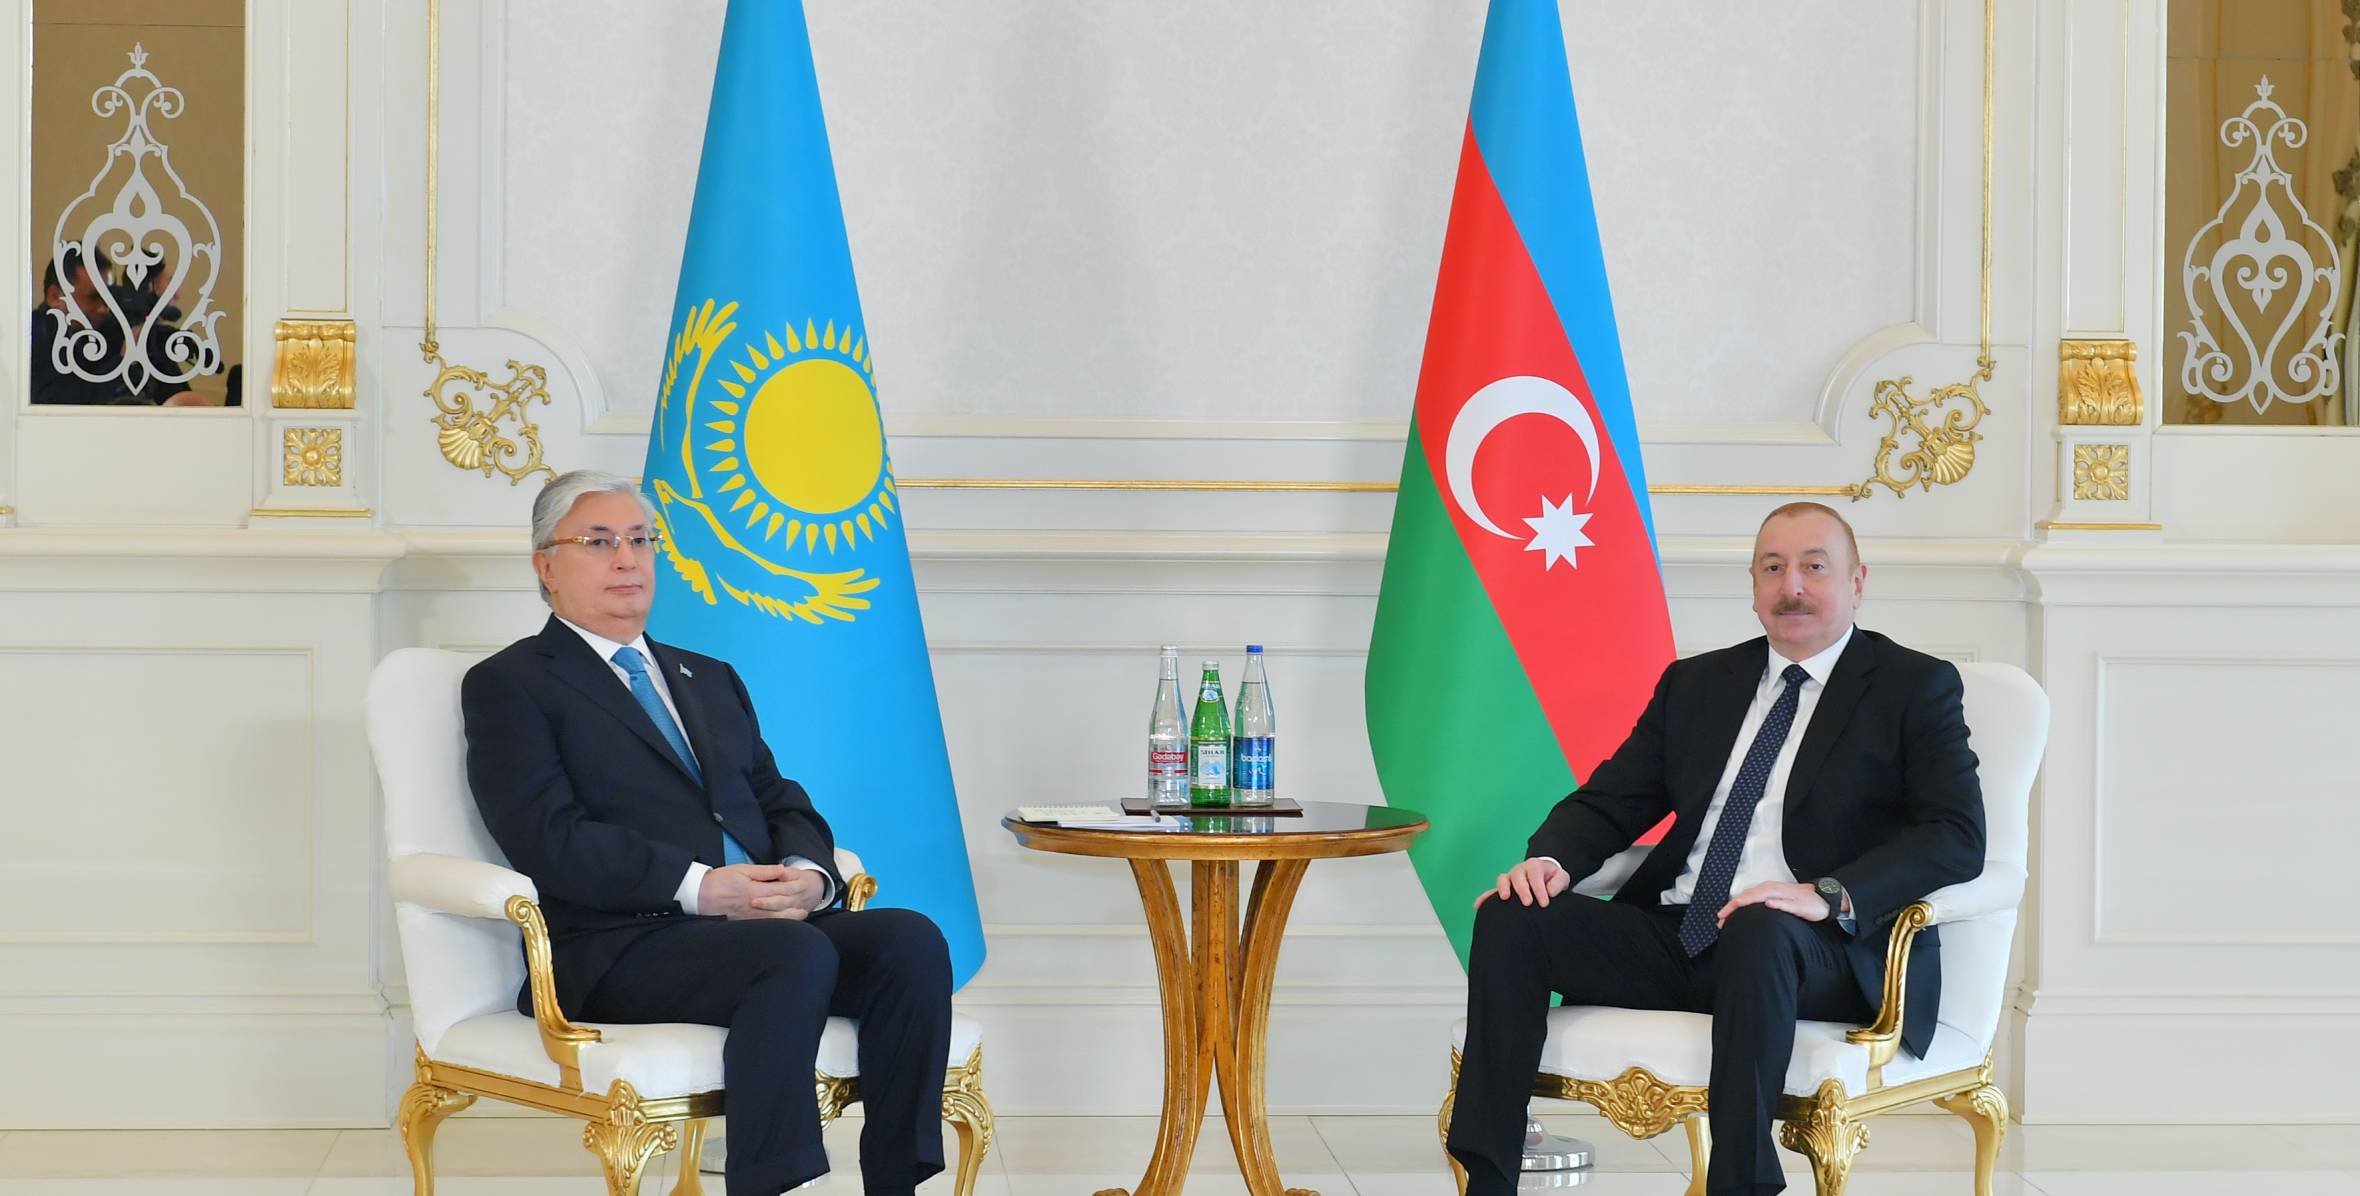 Ilham Aliyev held meeting with President of Kazakhstan Kassym-Jomart Tokayev in limited format